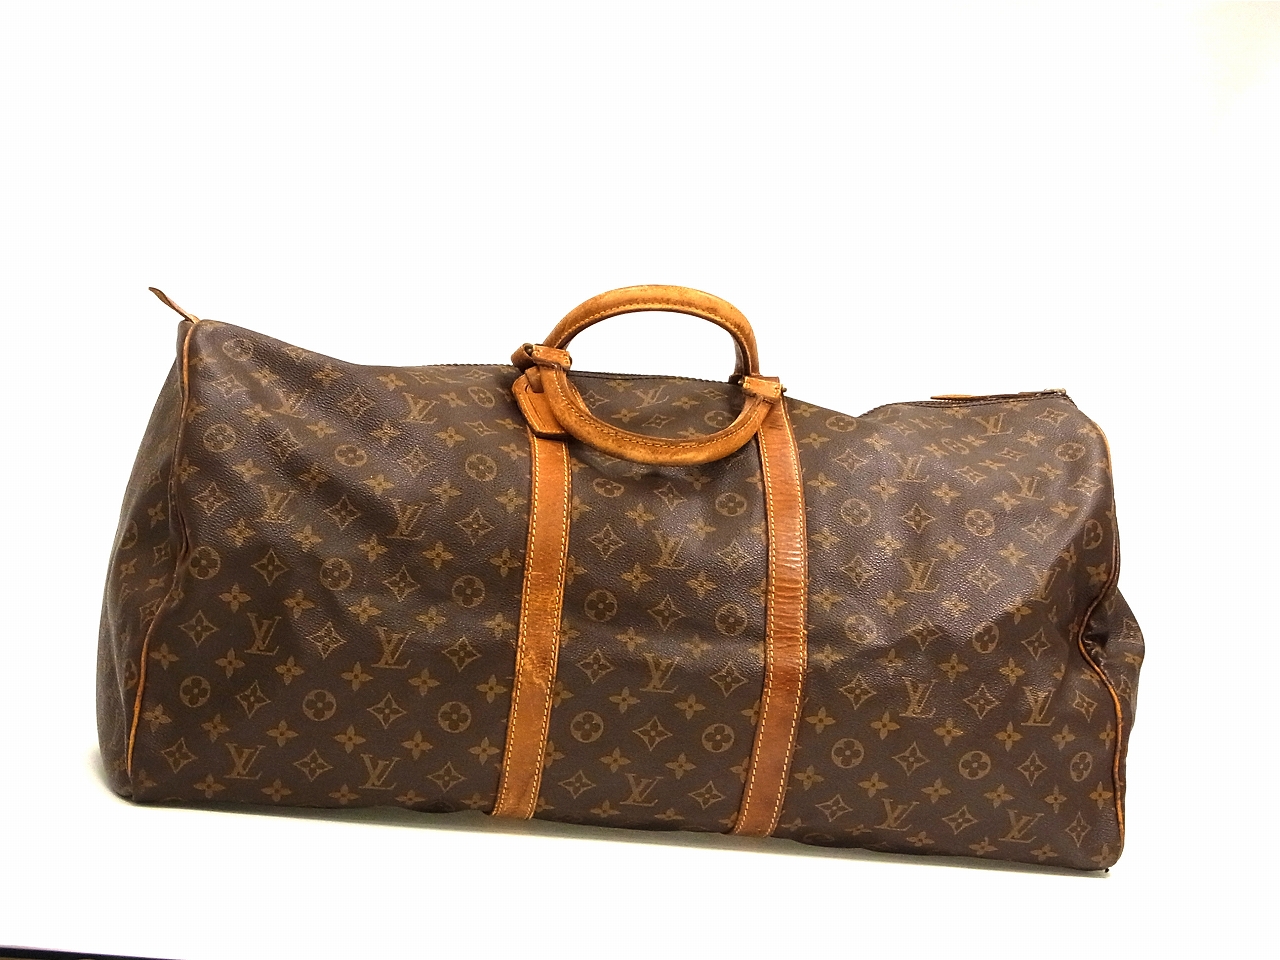 Louis Vuitton Handbags In South Africa | SEMA Data Co-op